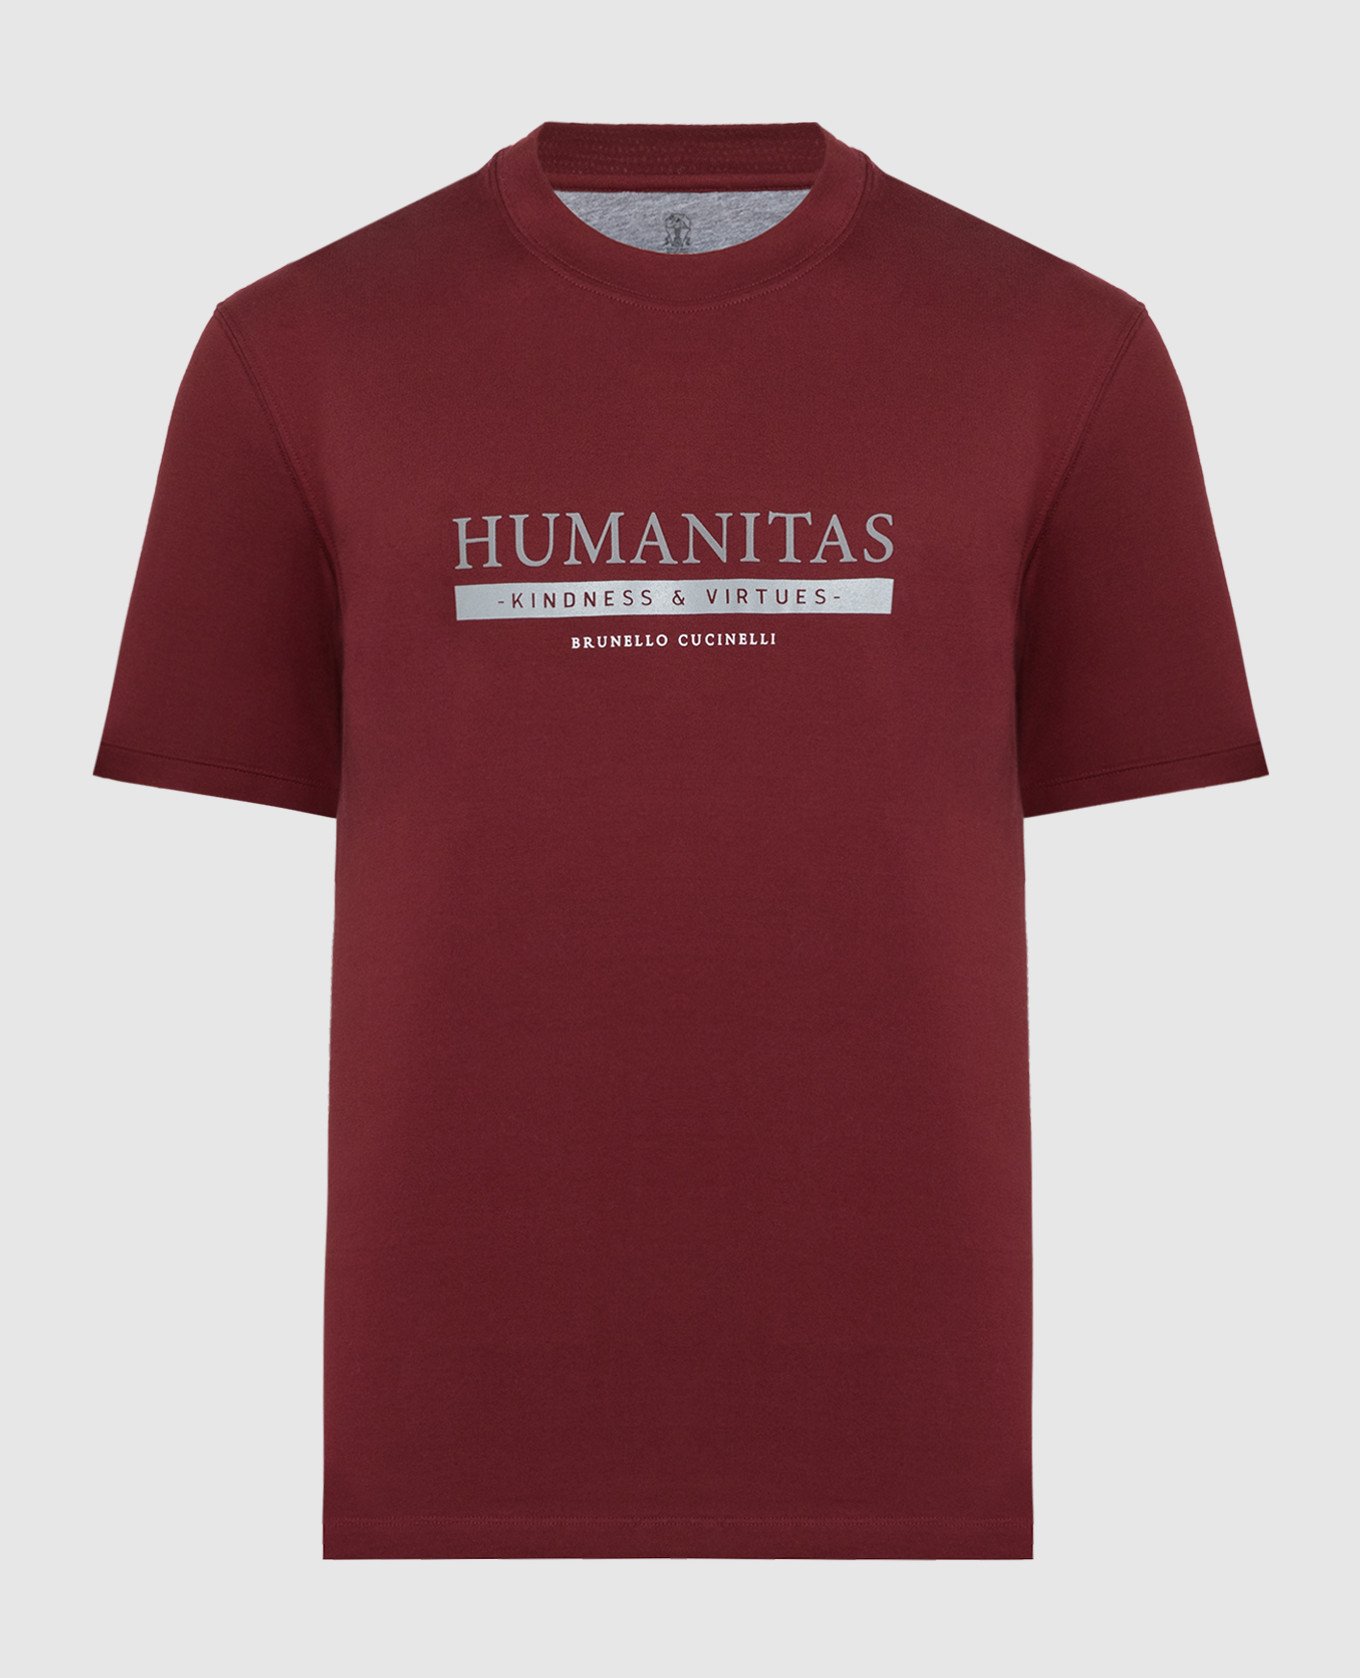 Burgundy T-shirt with a print